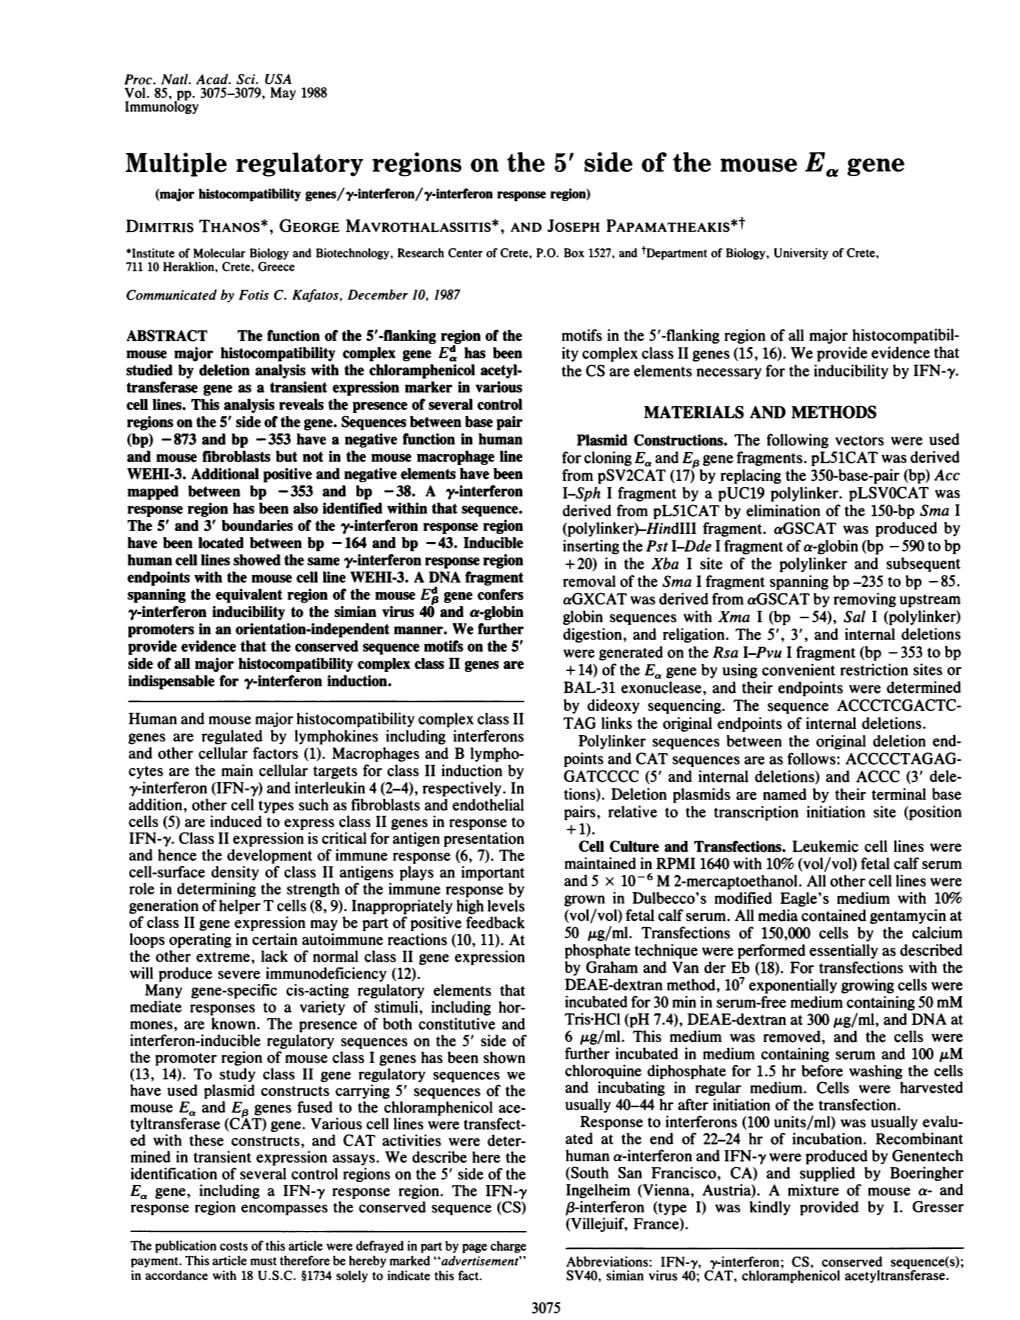 Multiple Regulatory Regions on the 5' Side of the Mouse Ea Gene